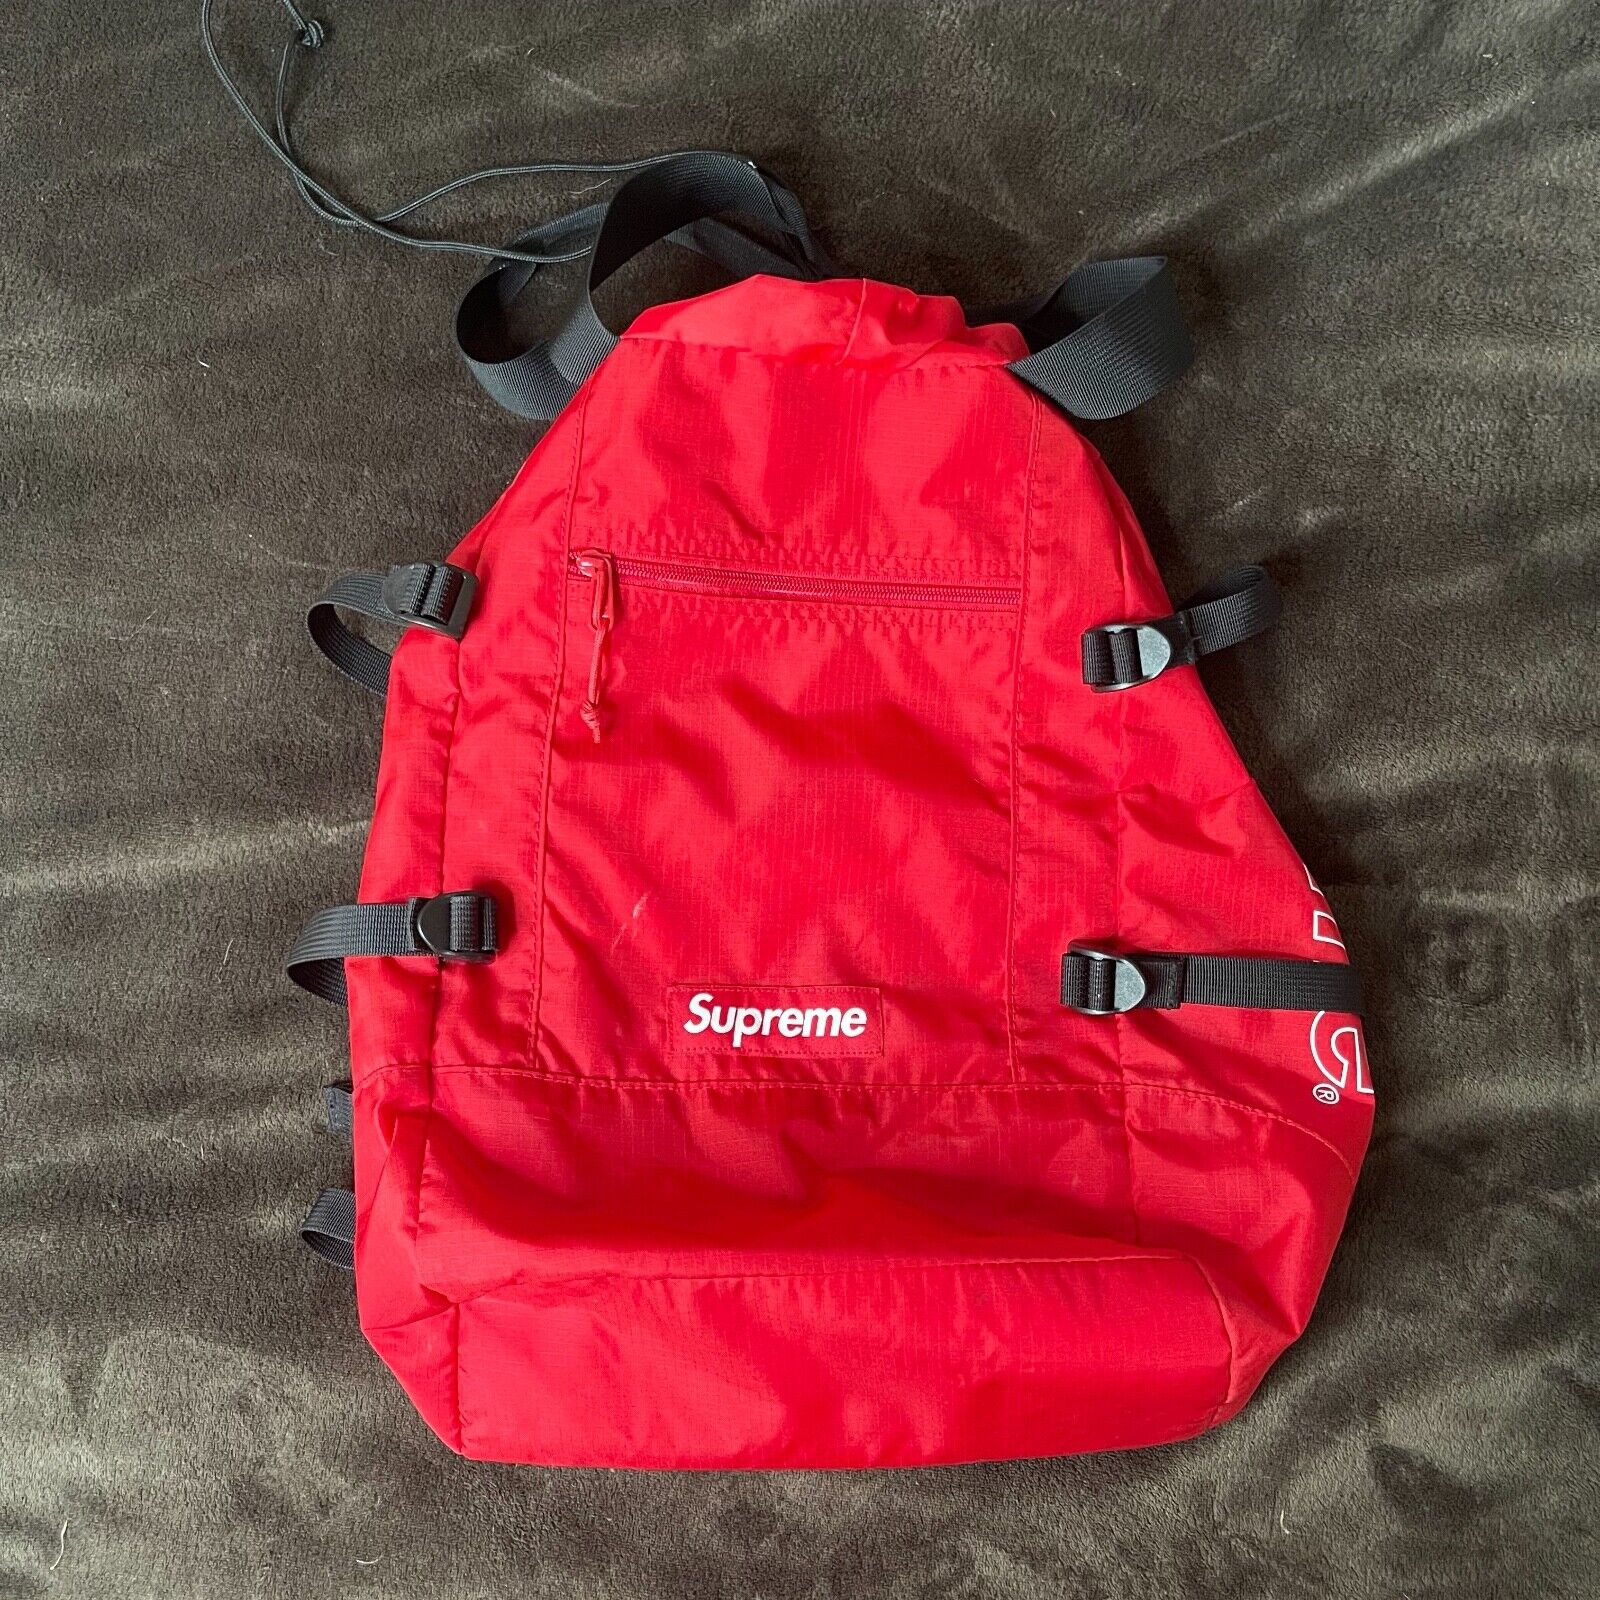 Supreme Backpack/Nylon/Red F1323 | eBay